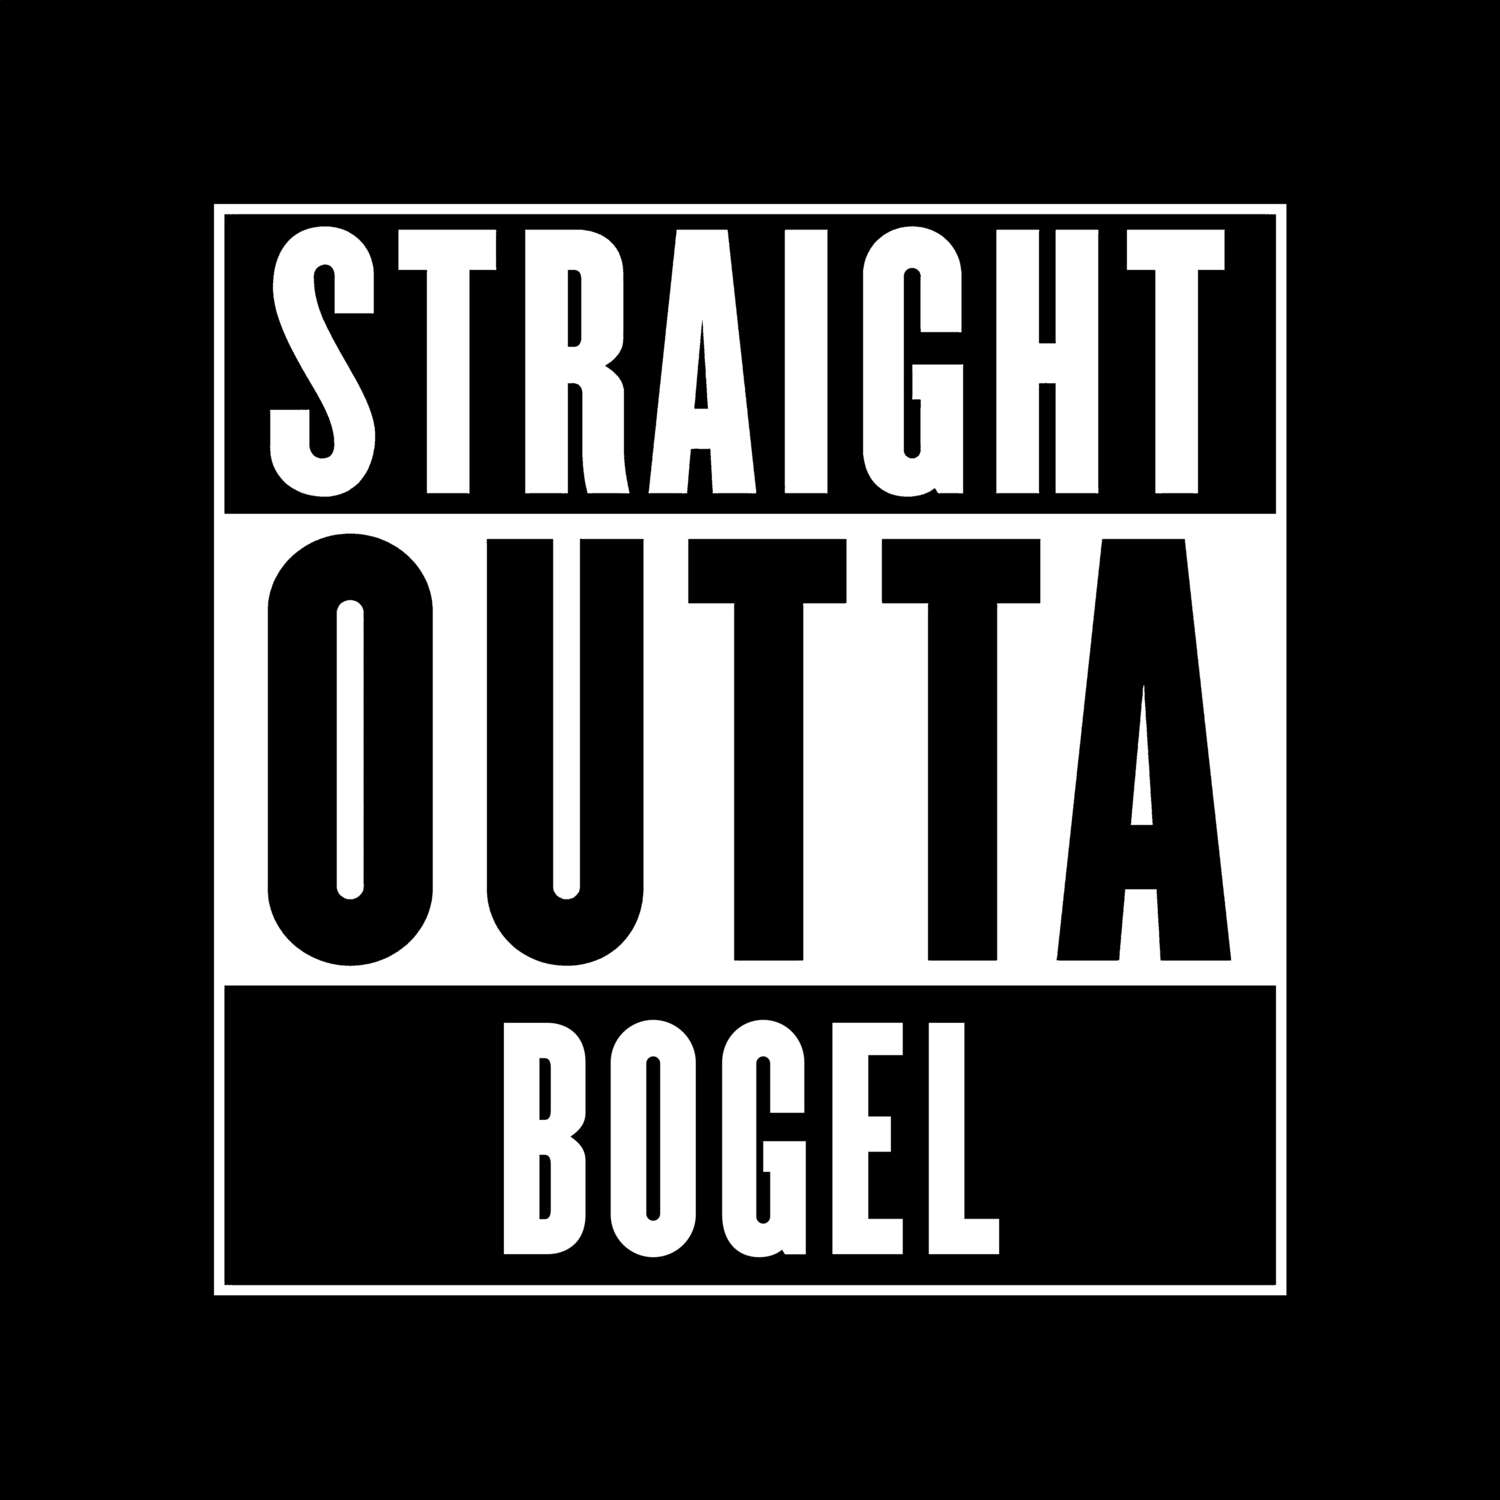 Bogel T-Shirt »Straight Outta«